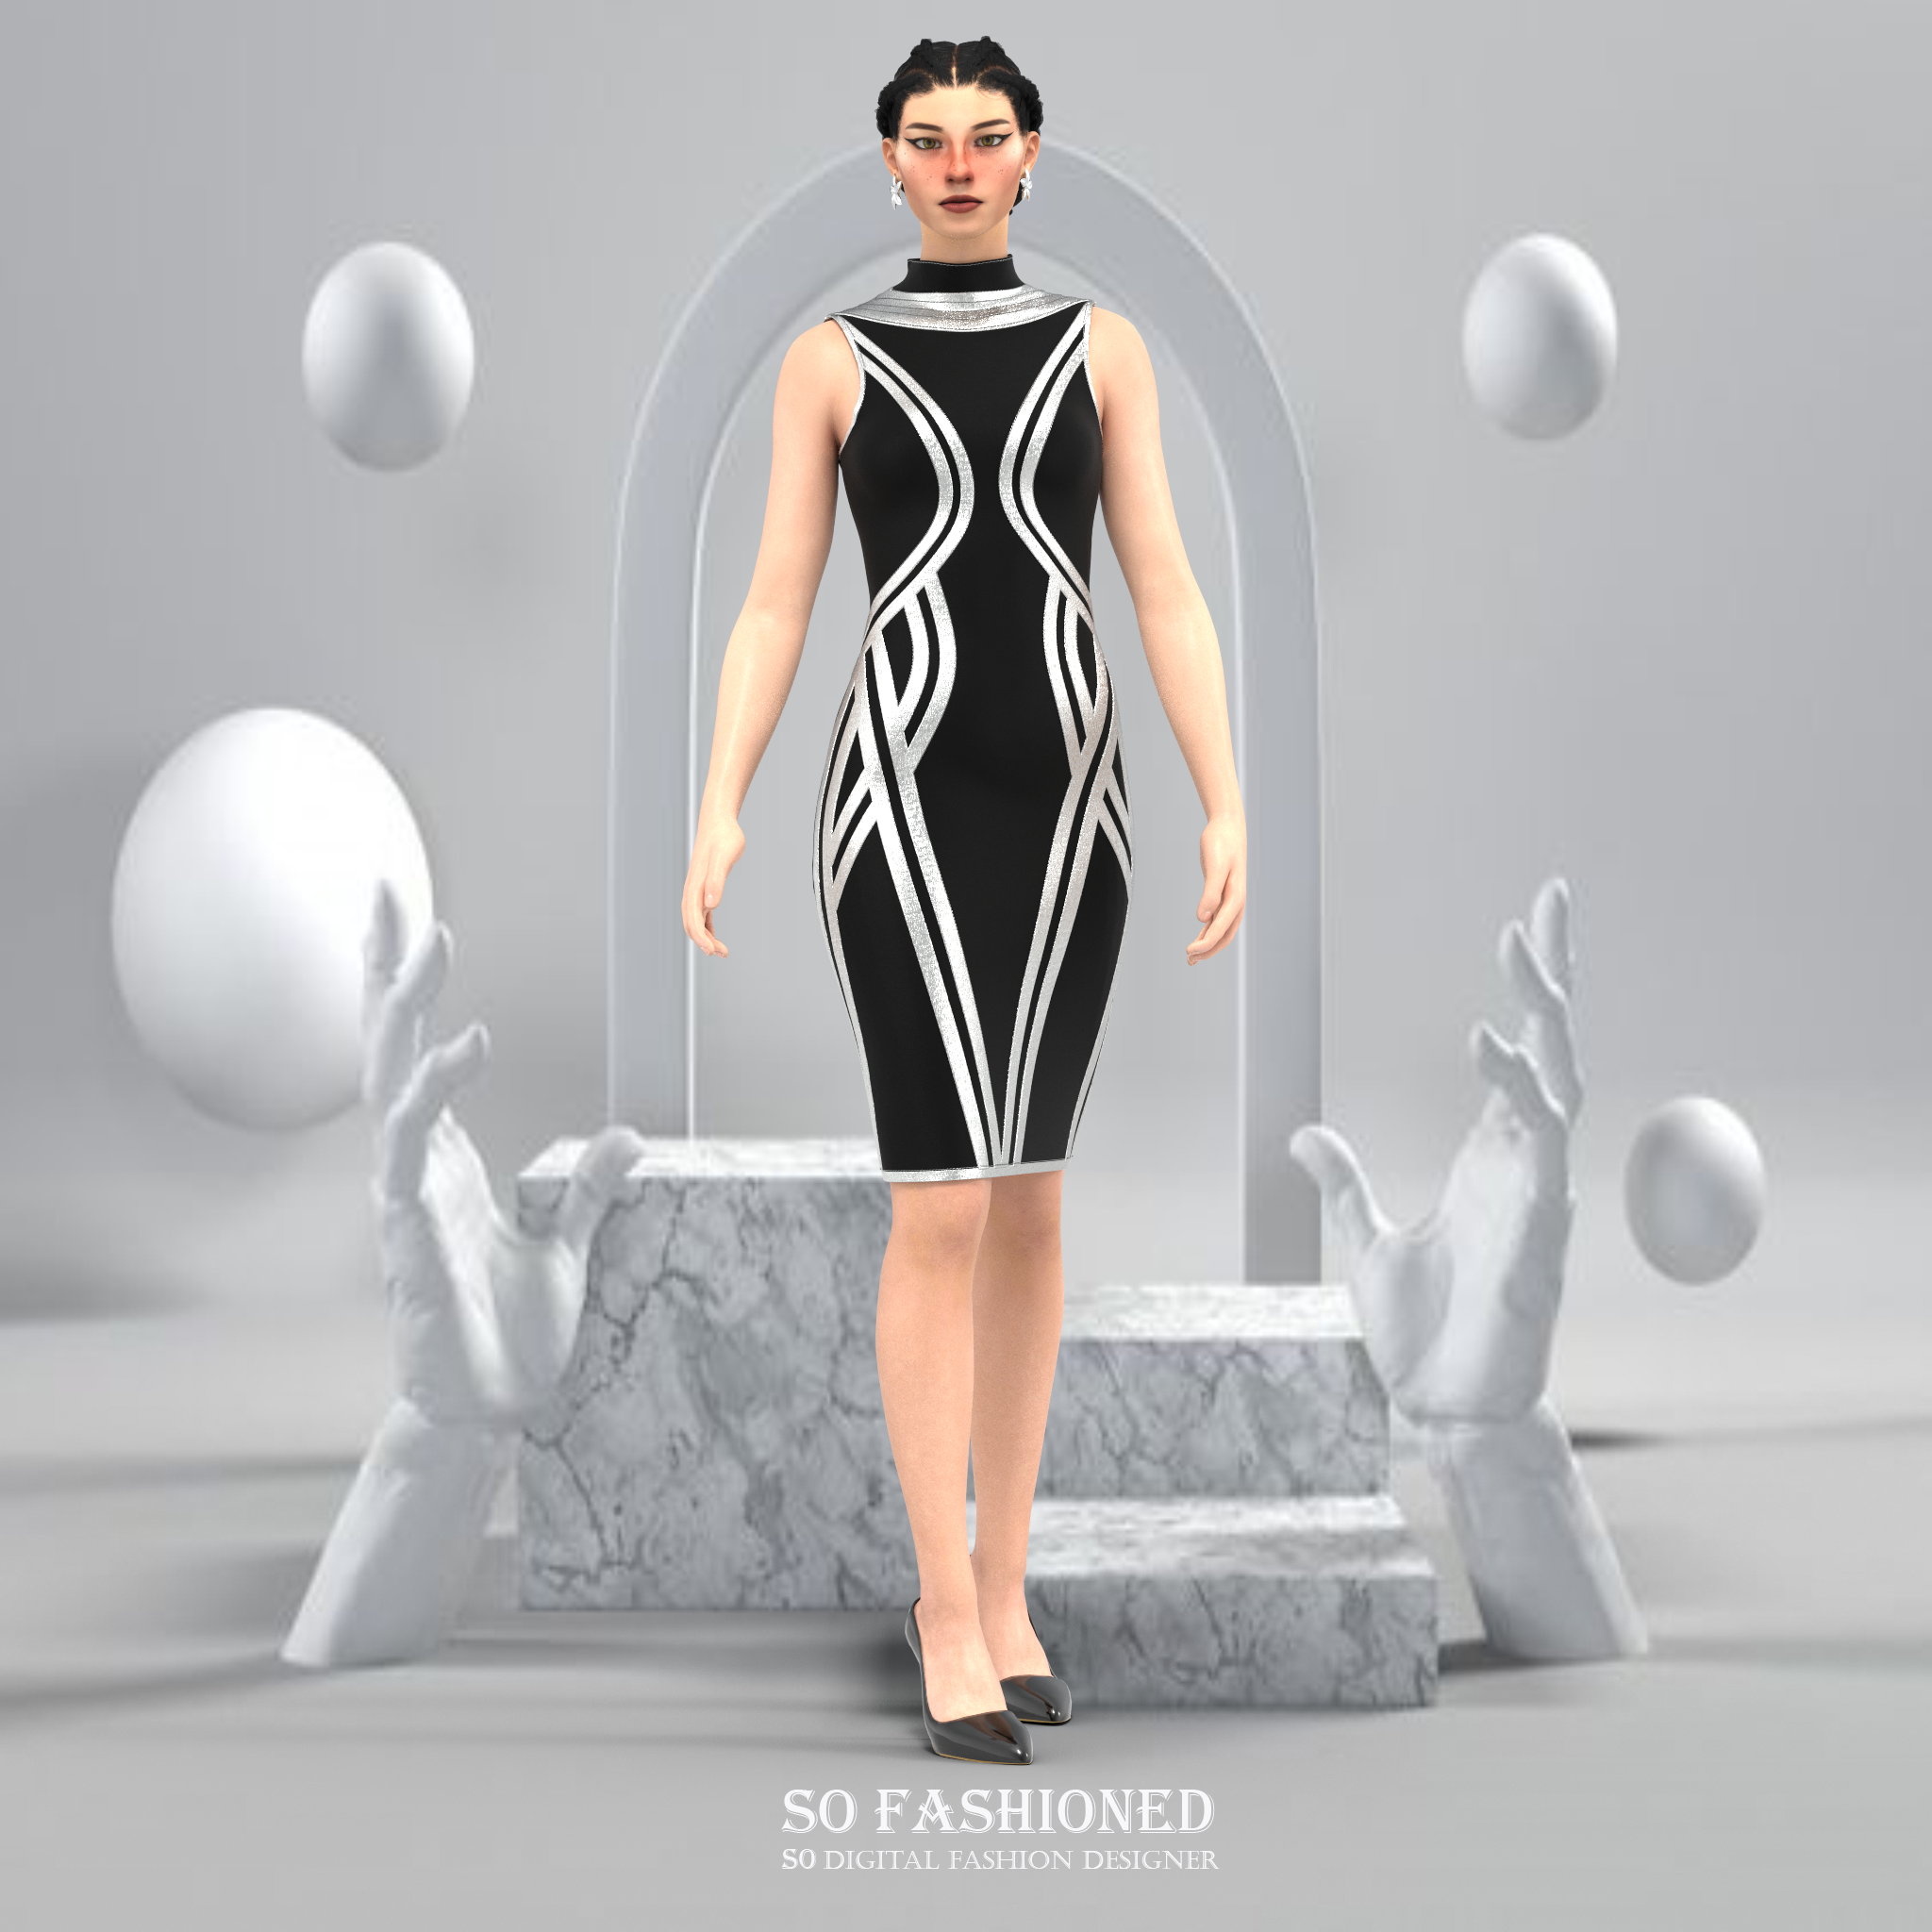 Futuristic dress